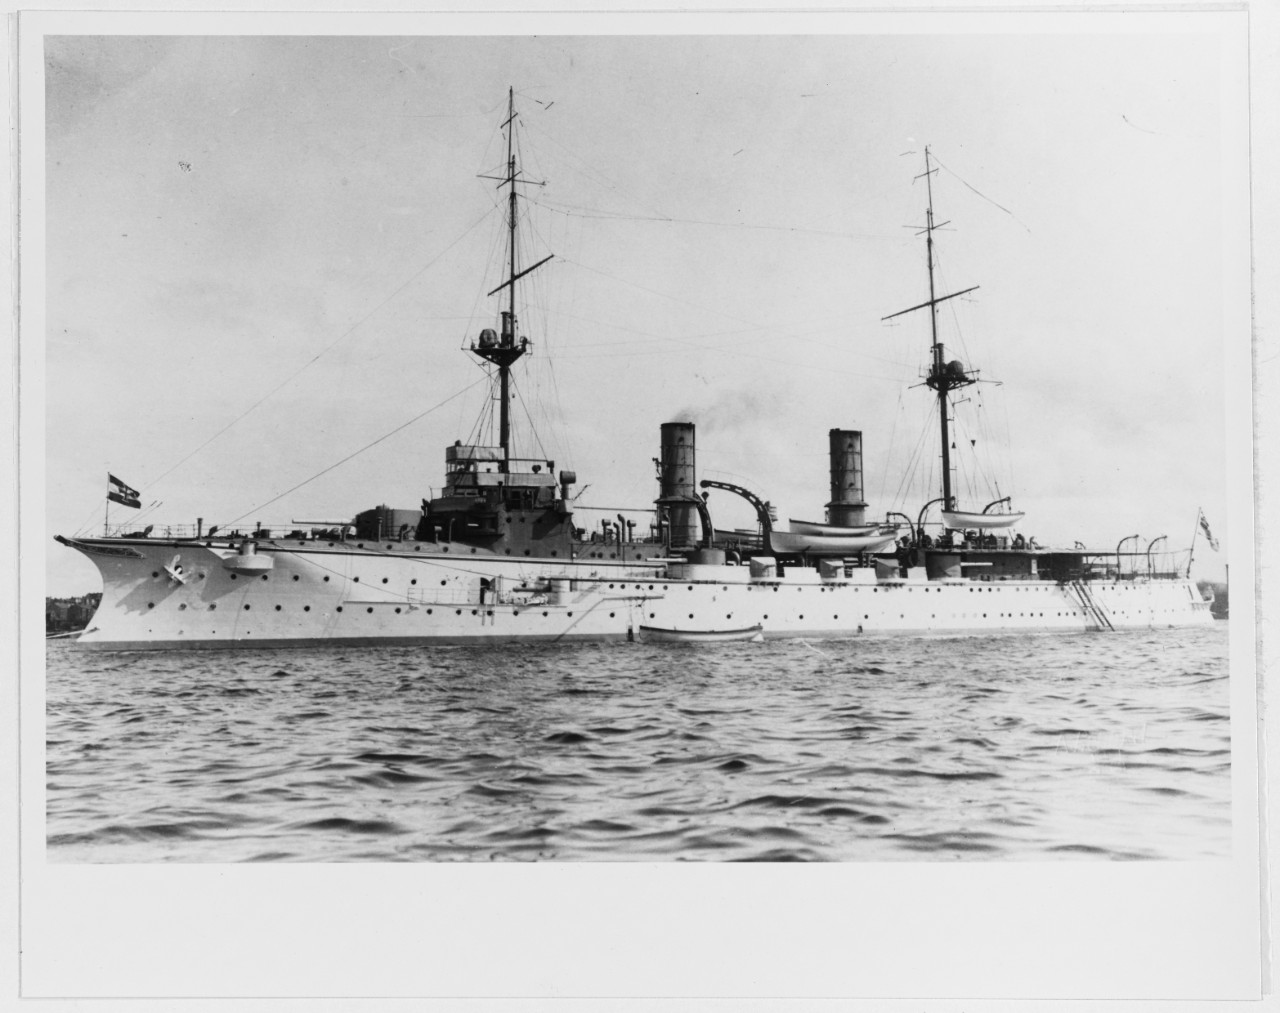 VICTORIA LOUISE (German cruiser, 1897-1919)